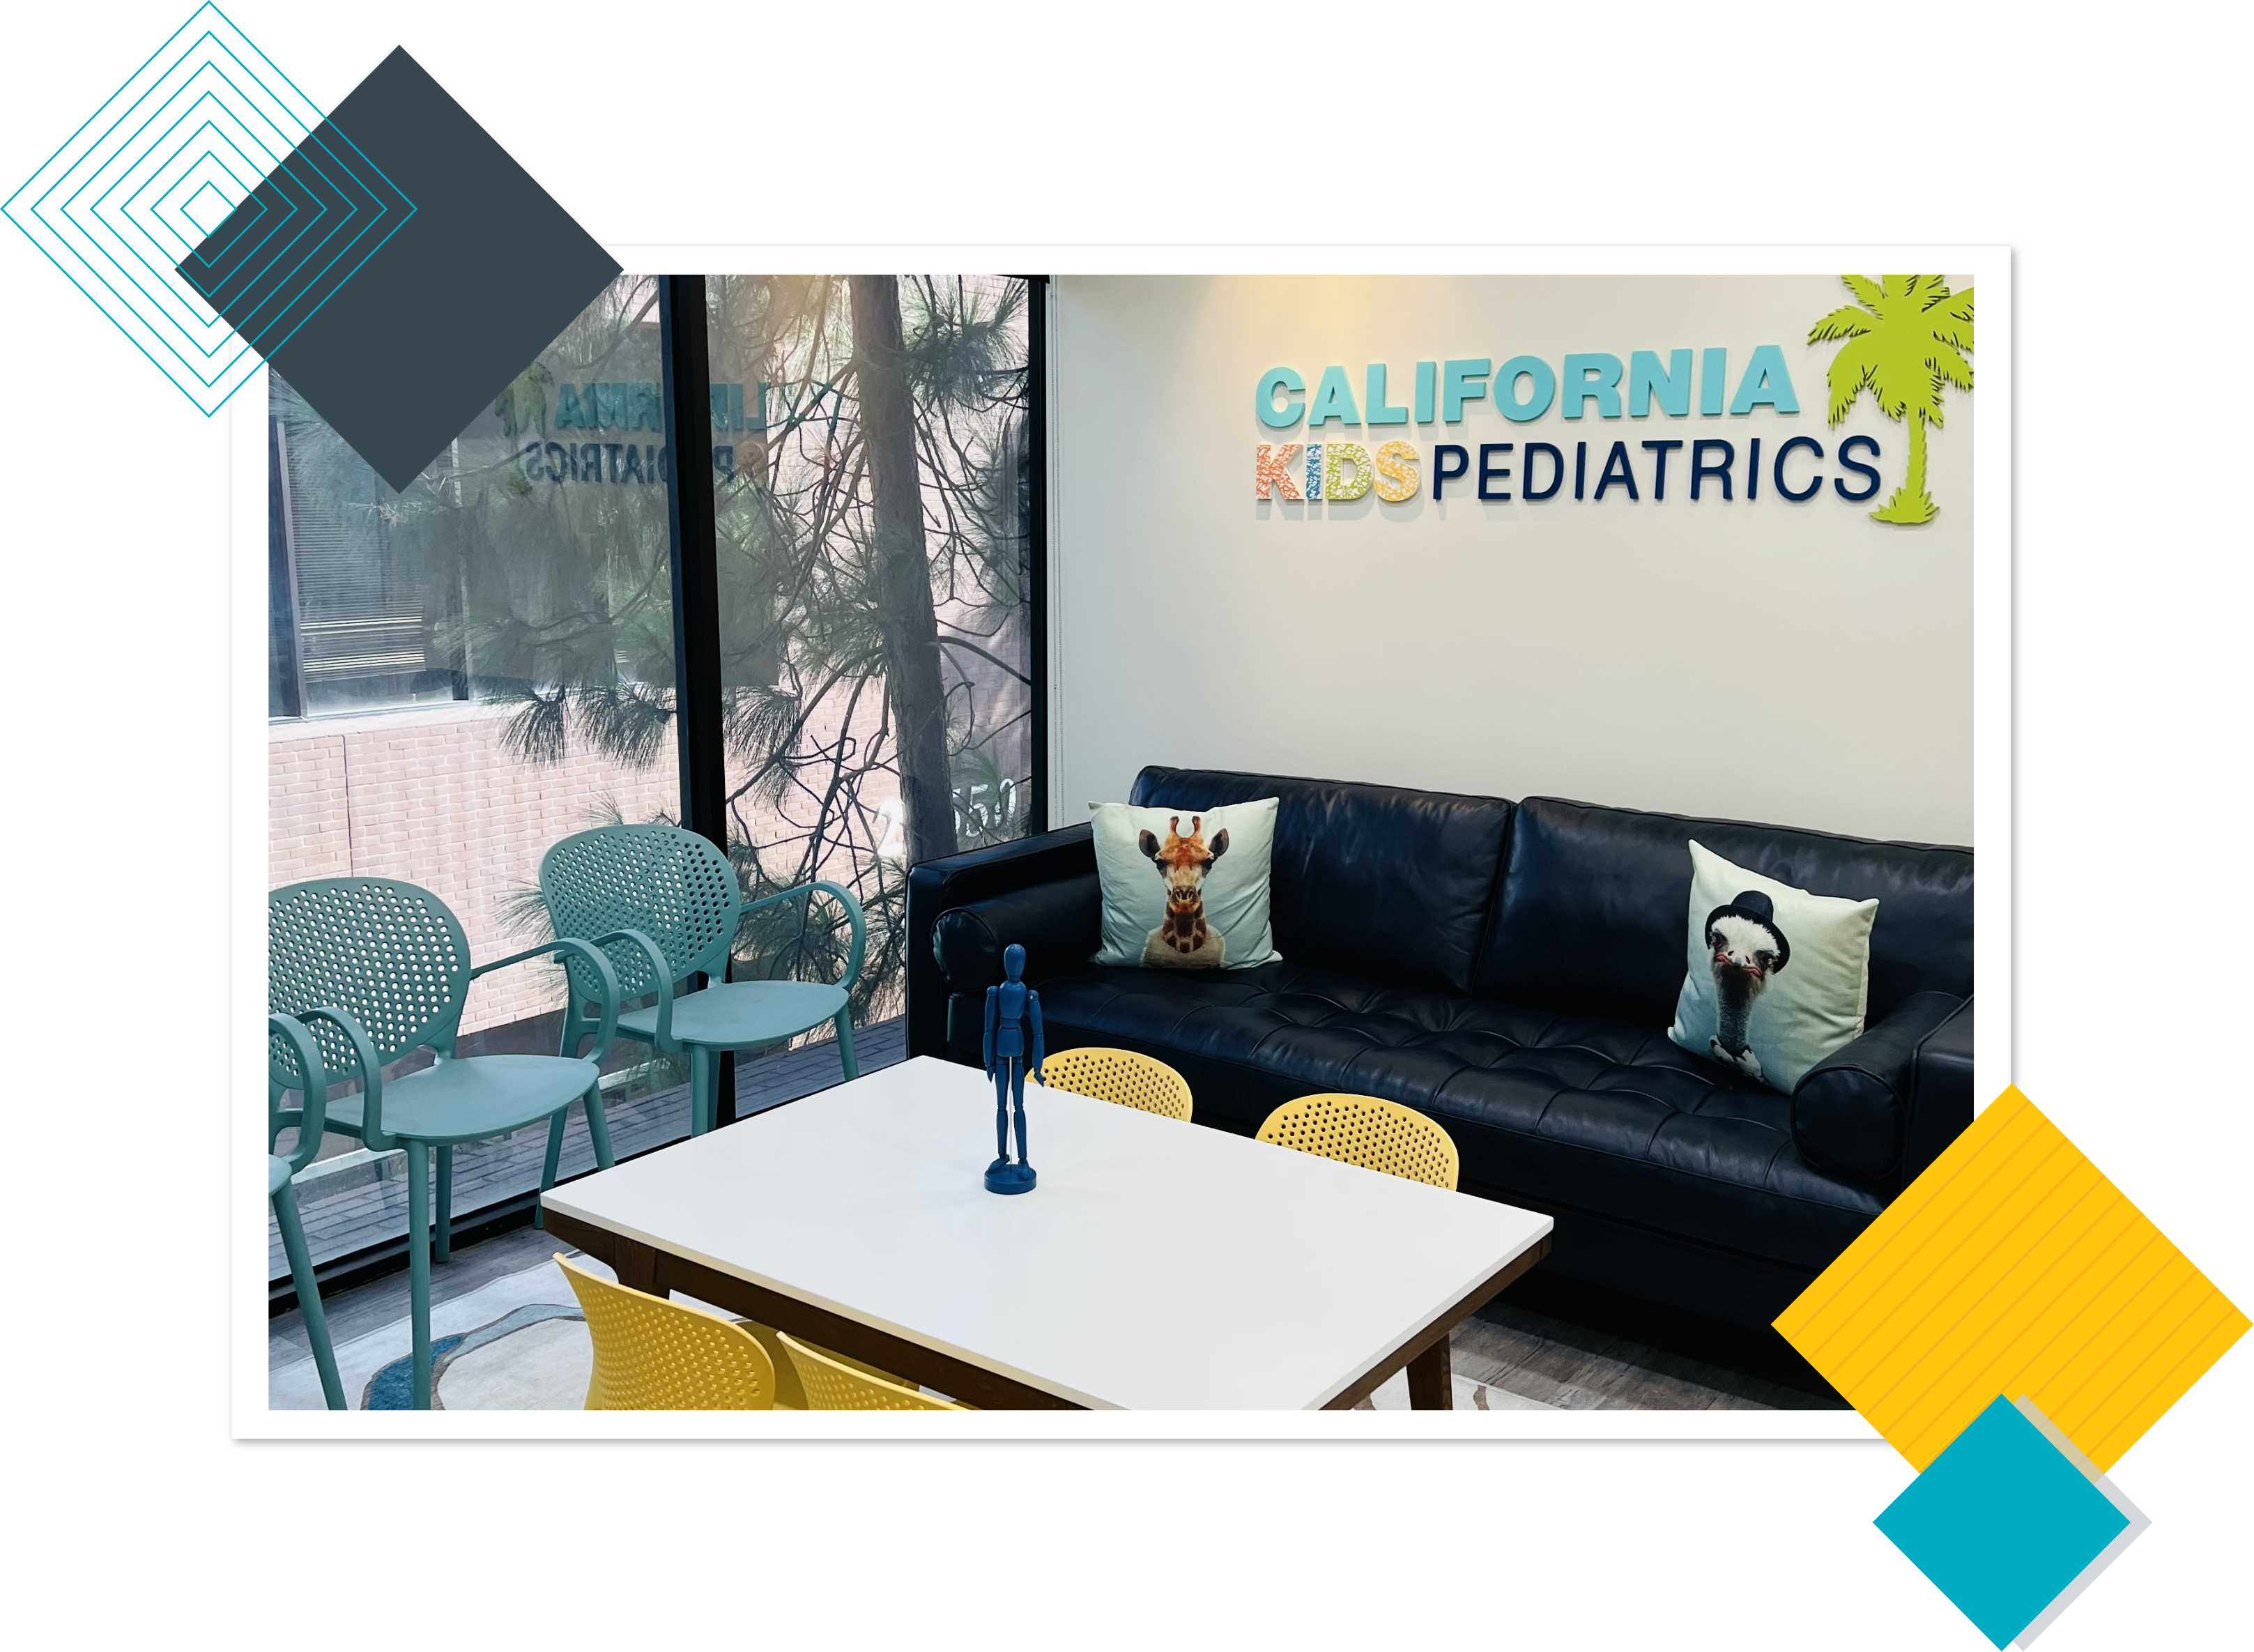 California Kids Pediatrics - South Bay Image